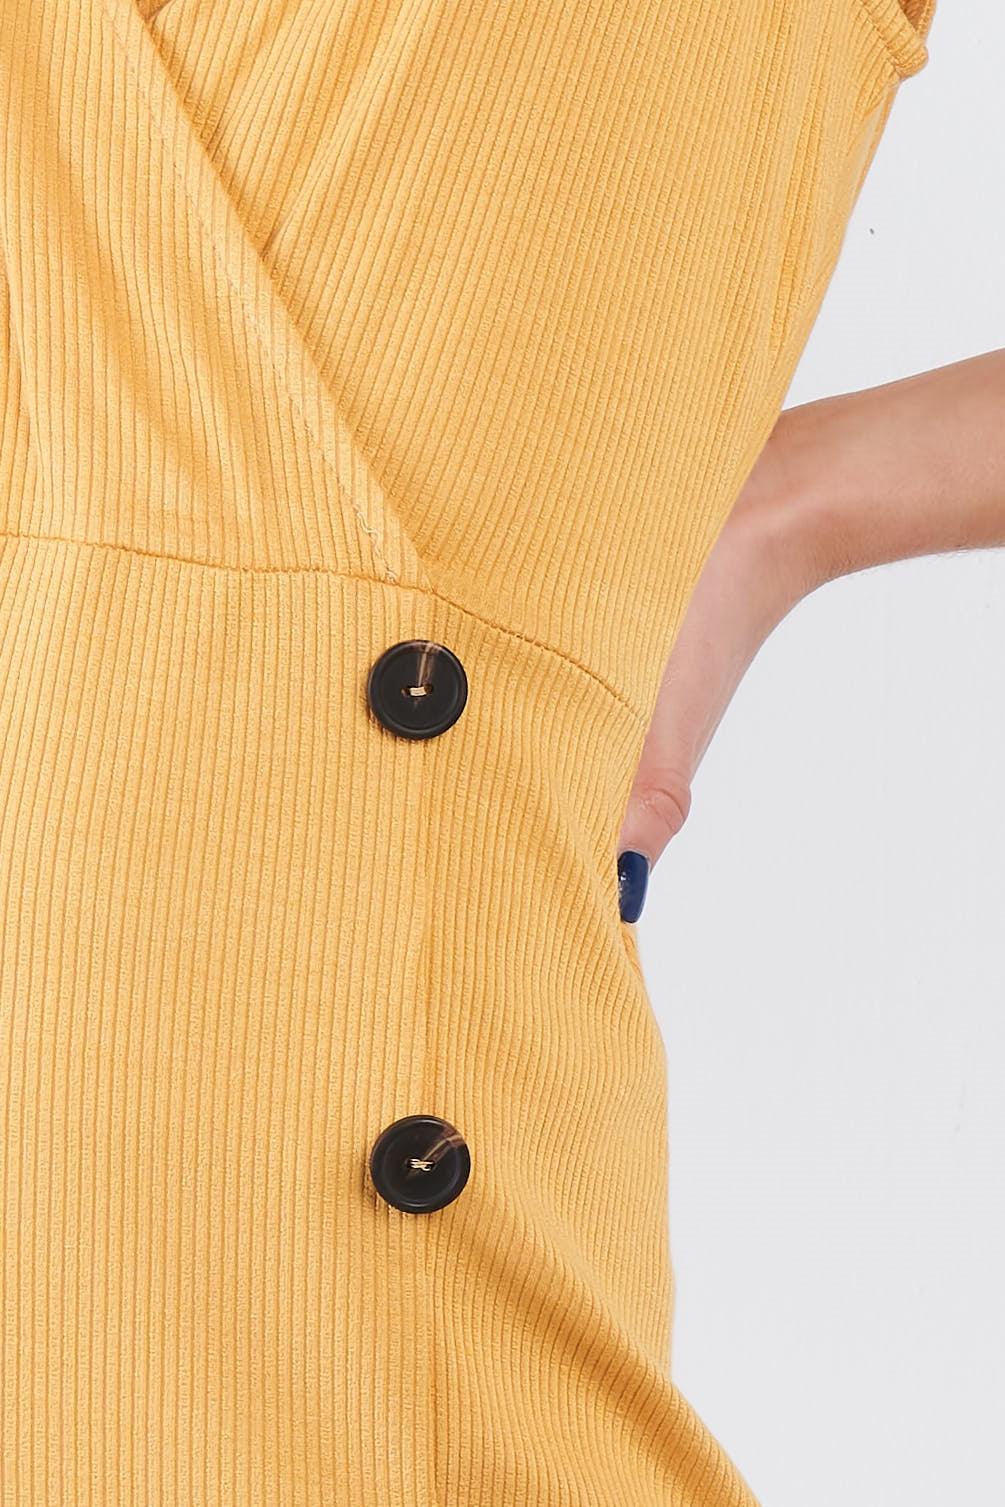 Mustard Yellow V-Neck Mock Side Button Casual Mini Dress  /1-1-2-1